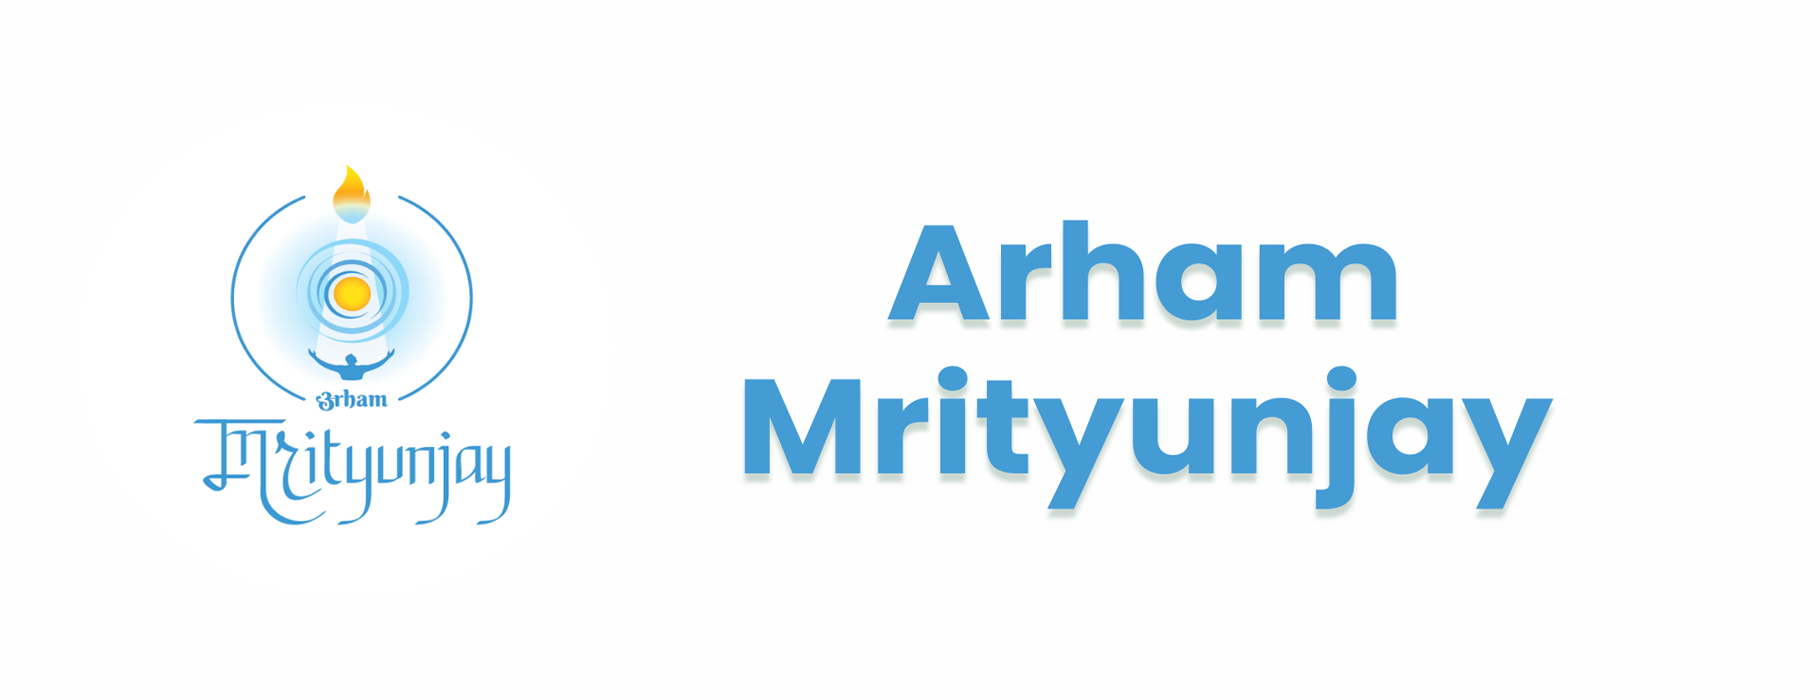 Arham Mrityunjay